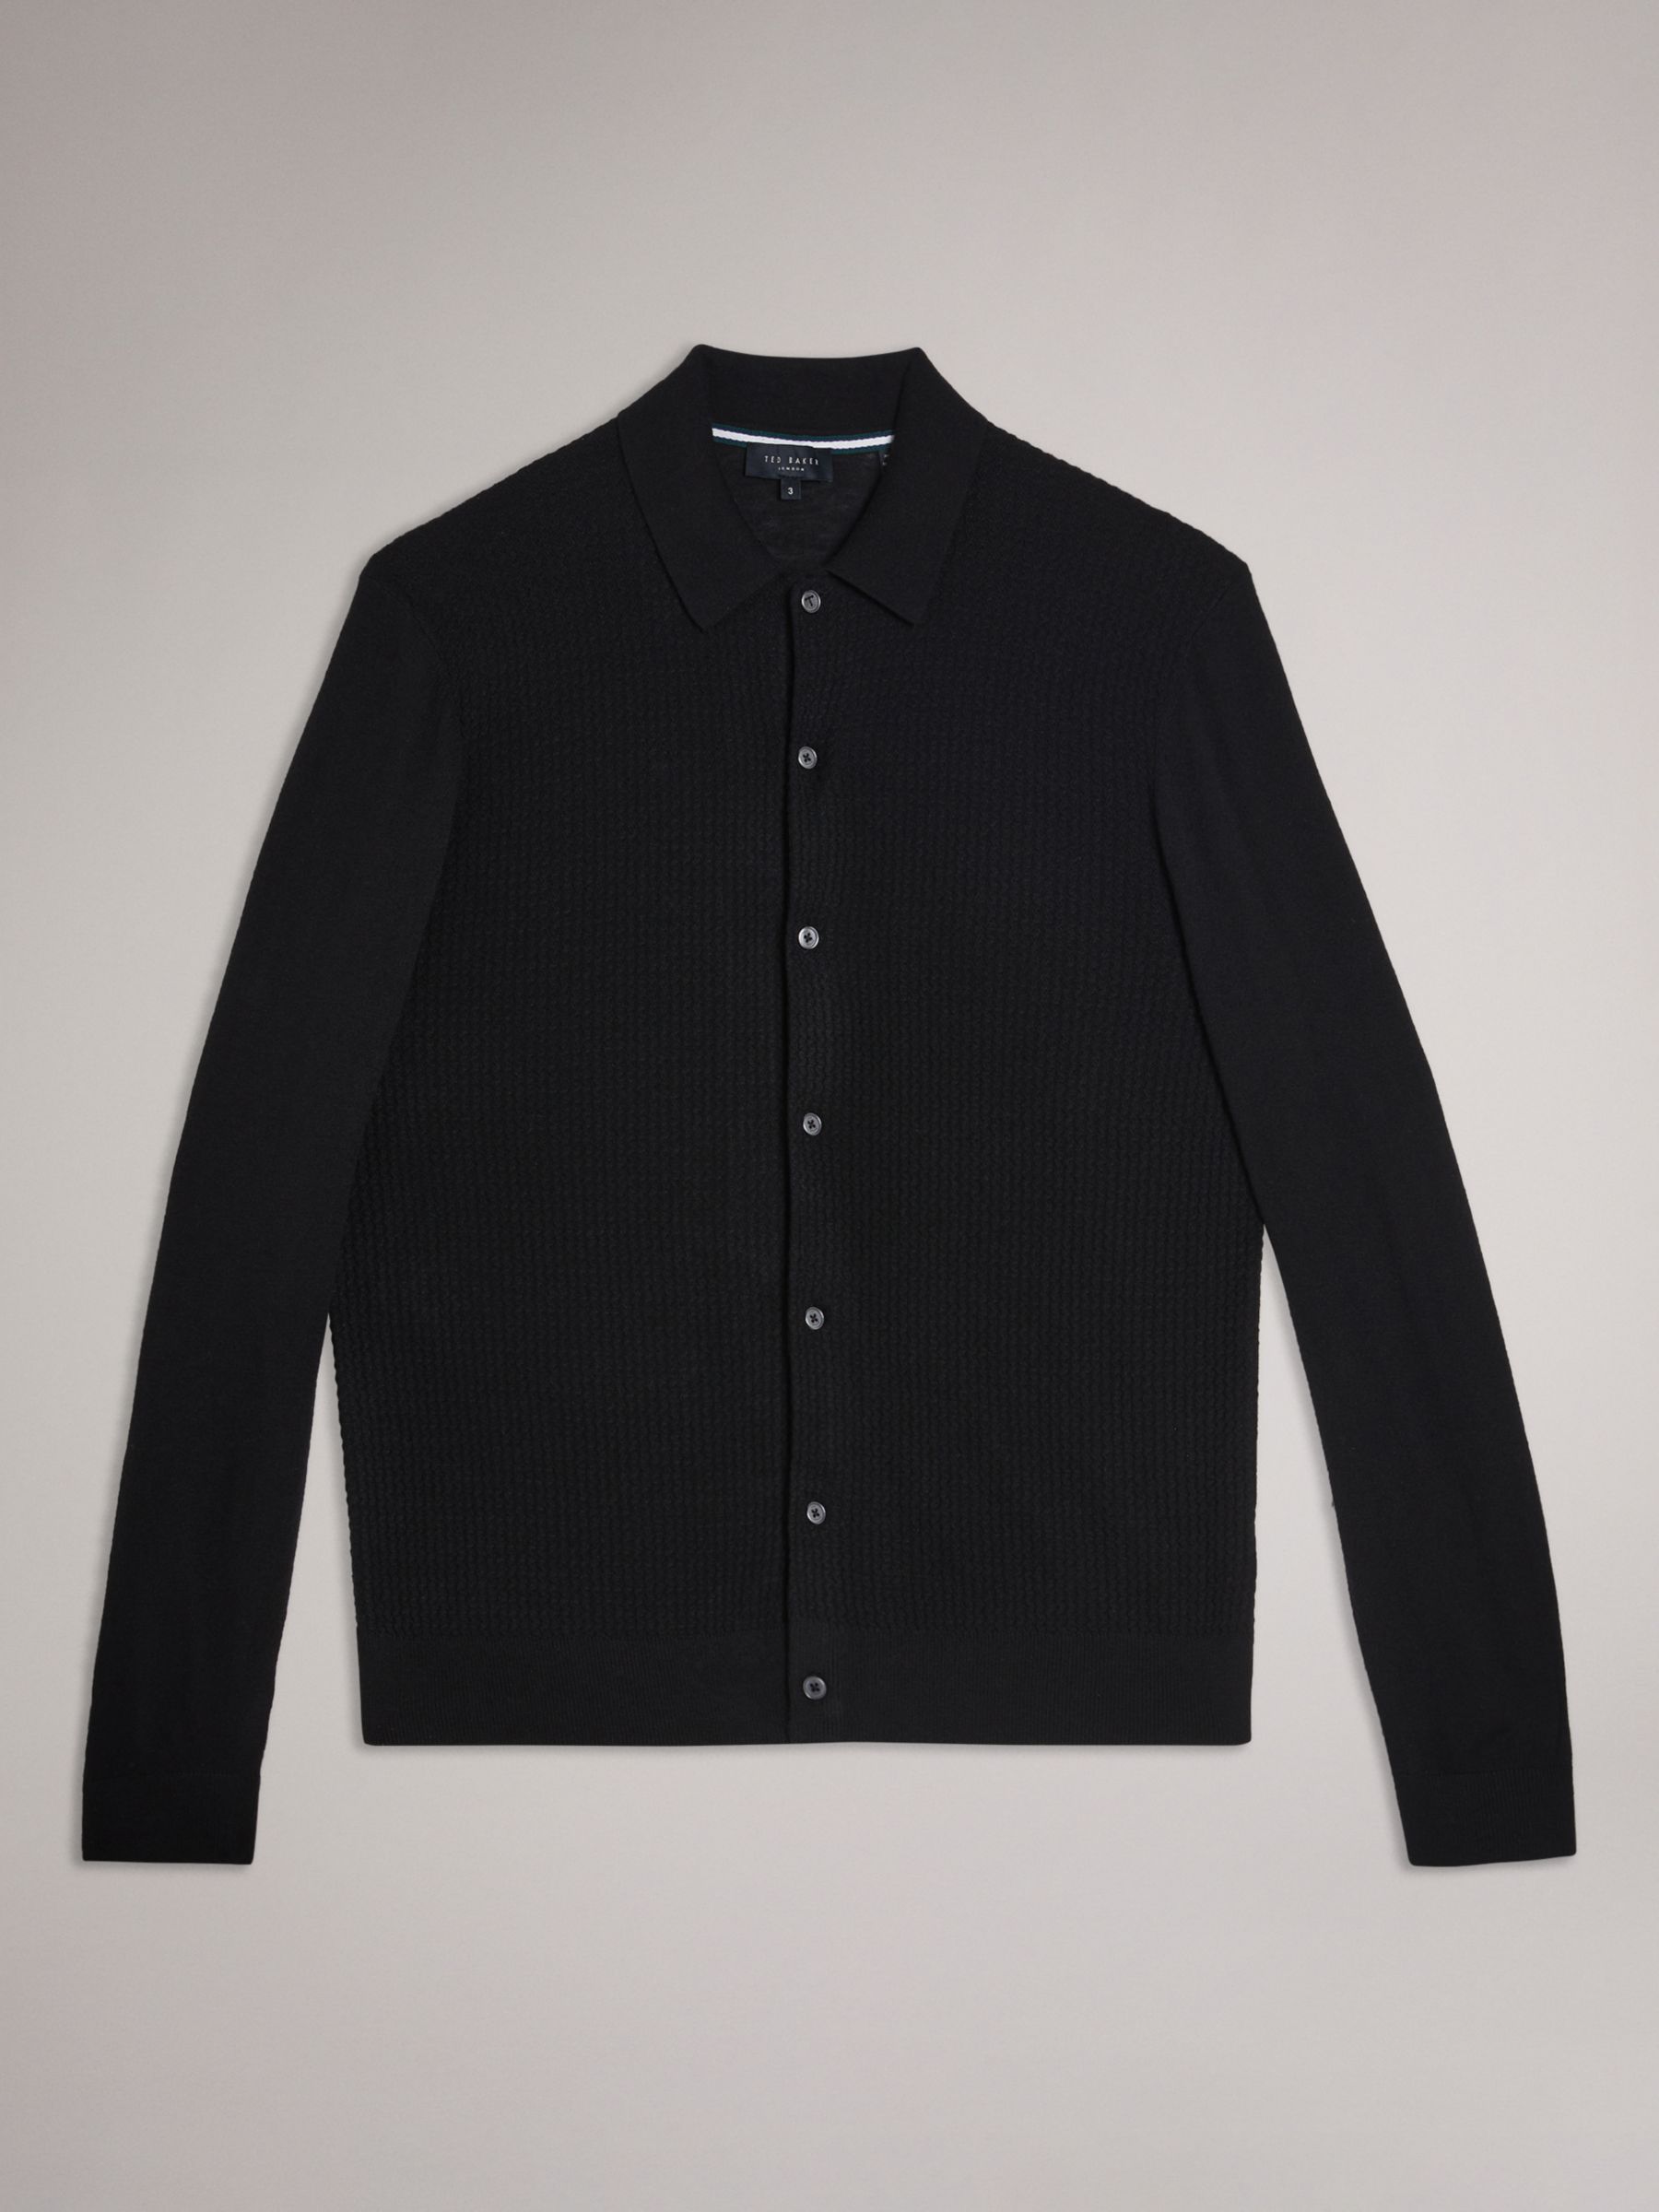 Ted Baker Oidar Long Sleee Revere Collar Knitted Shirt, Black, XXXL